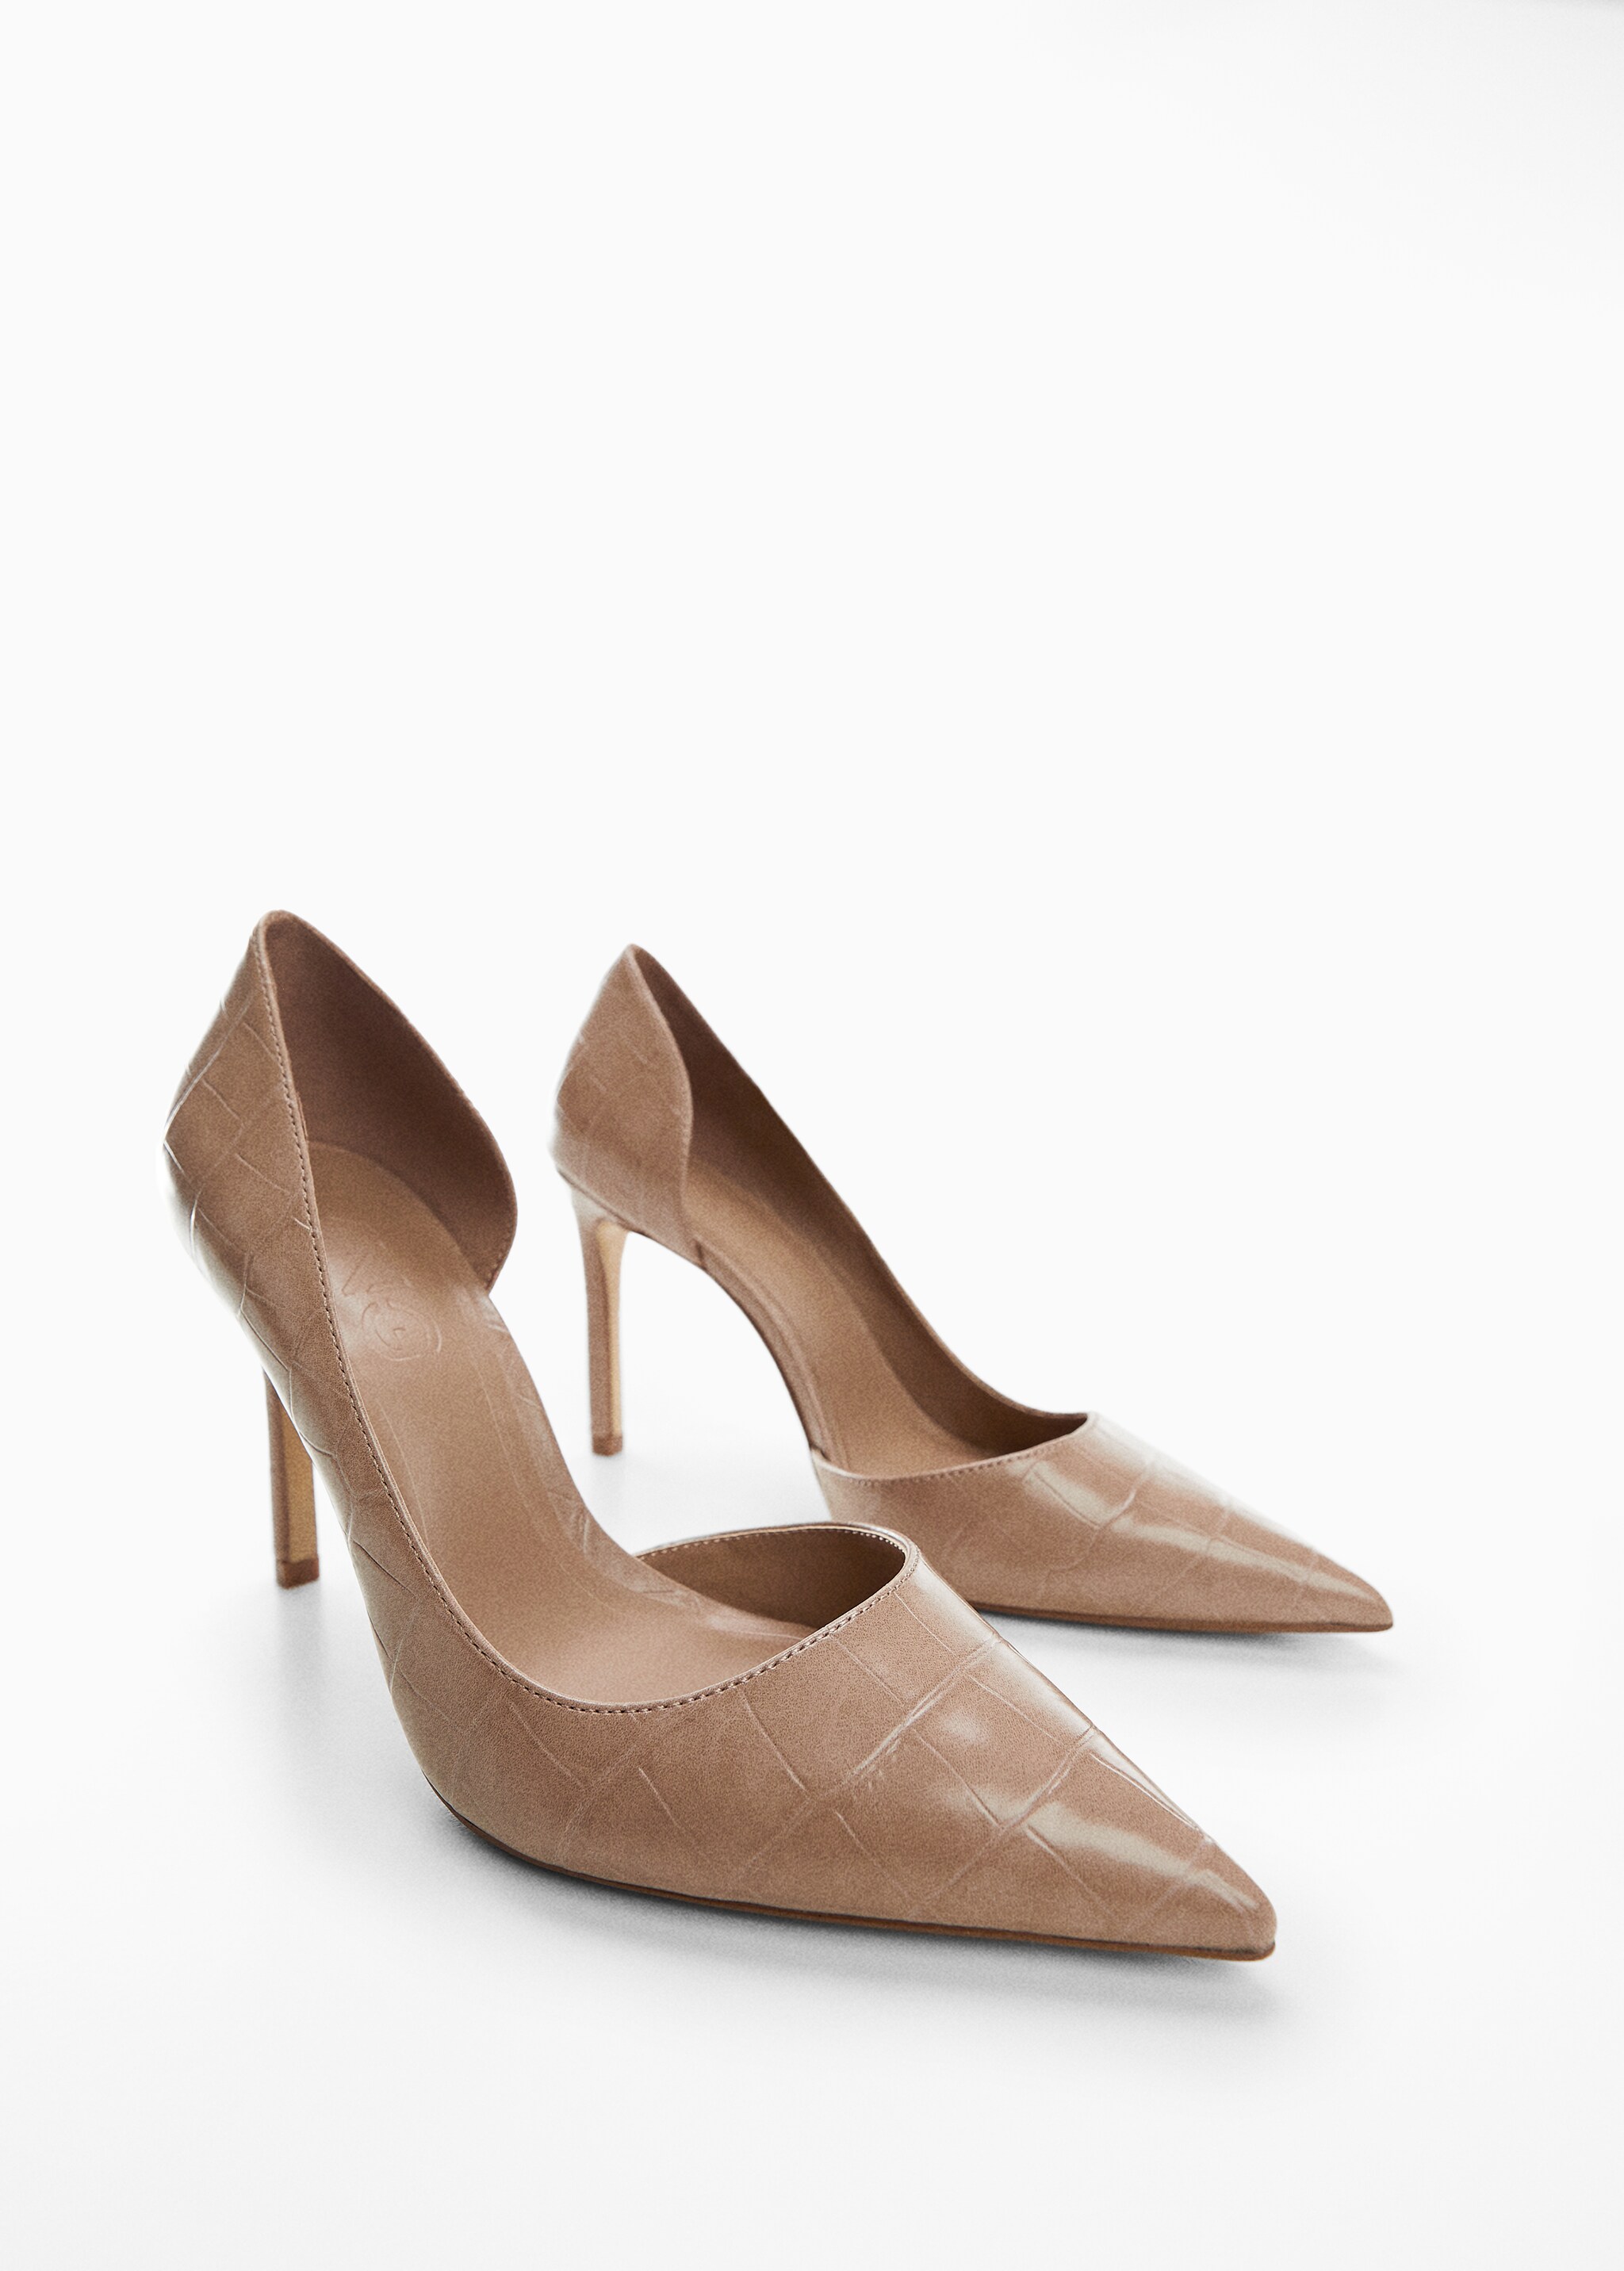 Croc-effect heeled shoes - Medium plane